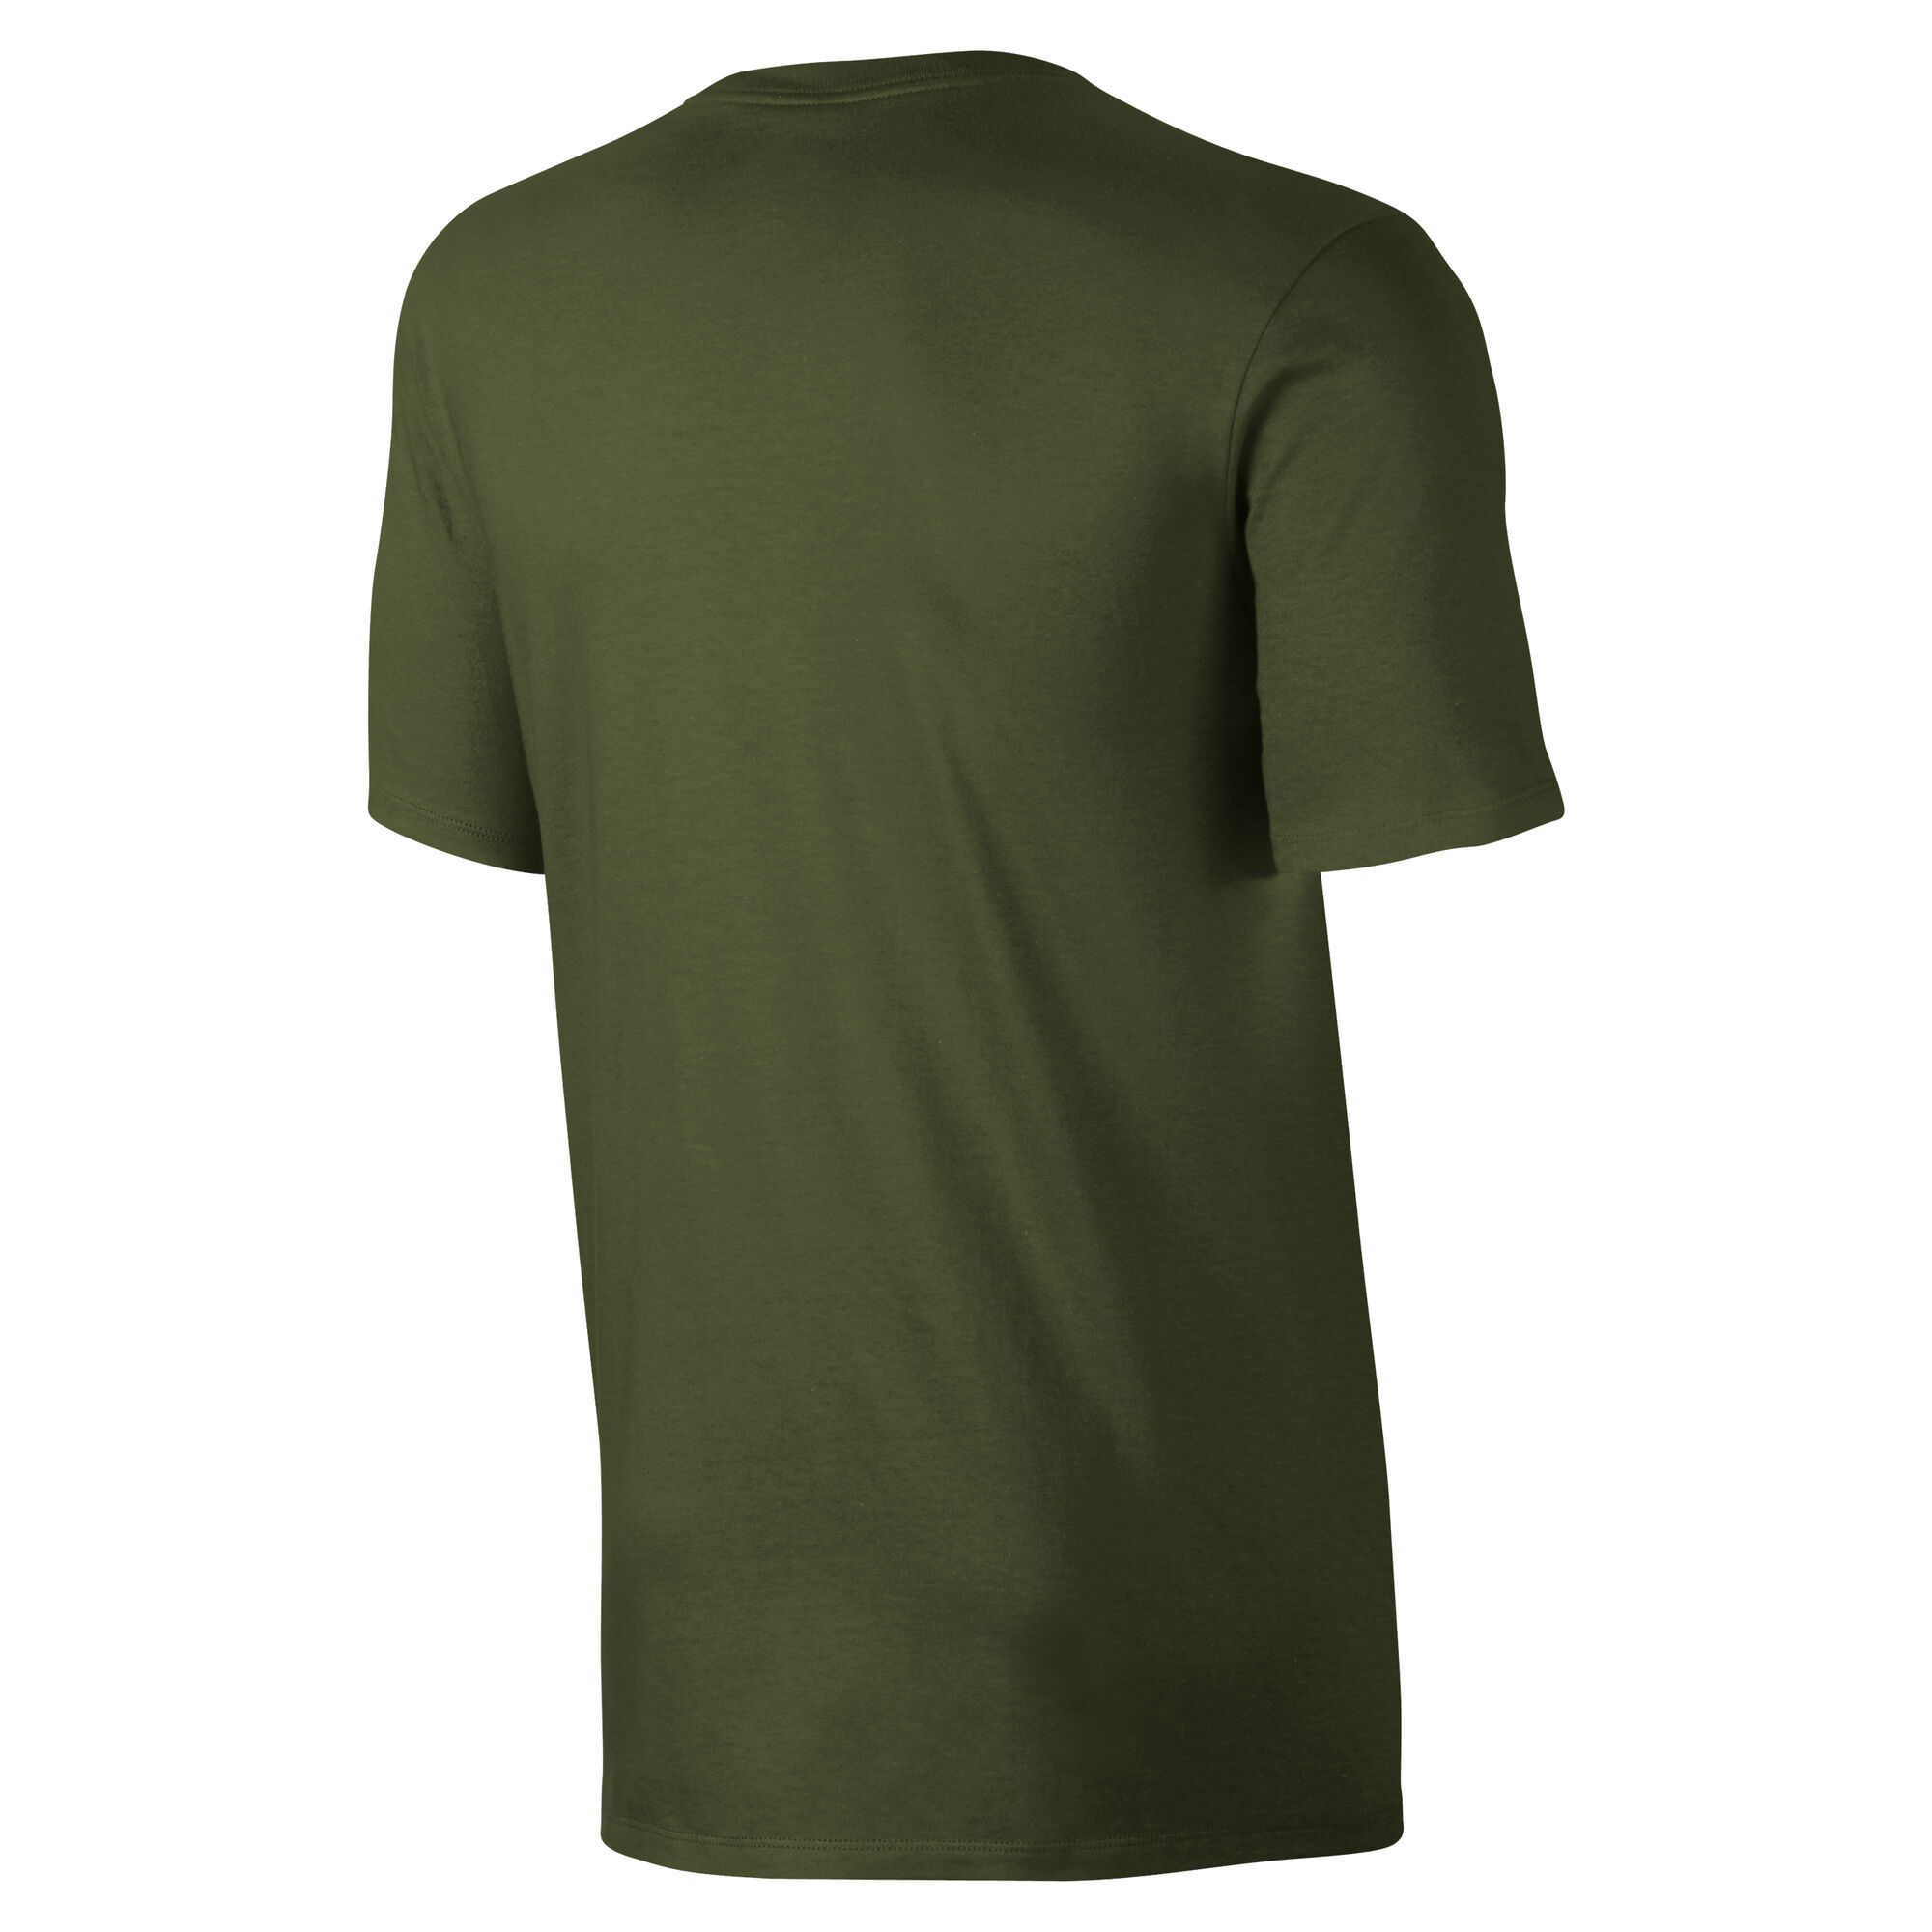 Buy Nike Sportswear T-Shirt Men Olive, Black online | Tennis Point UK